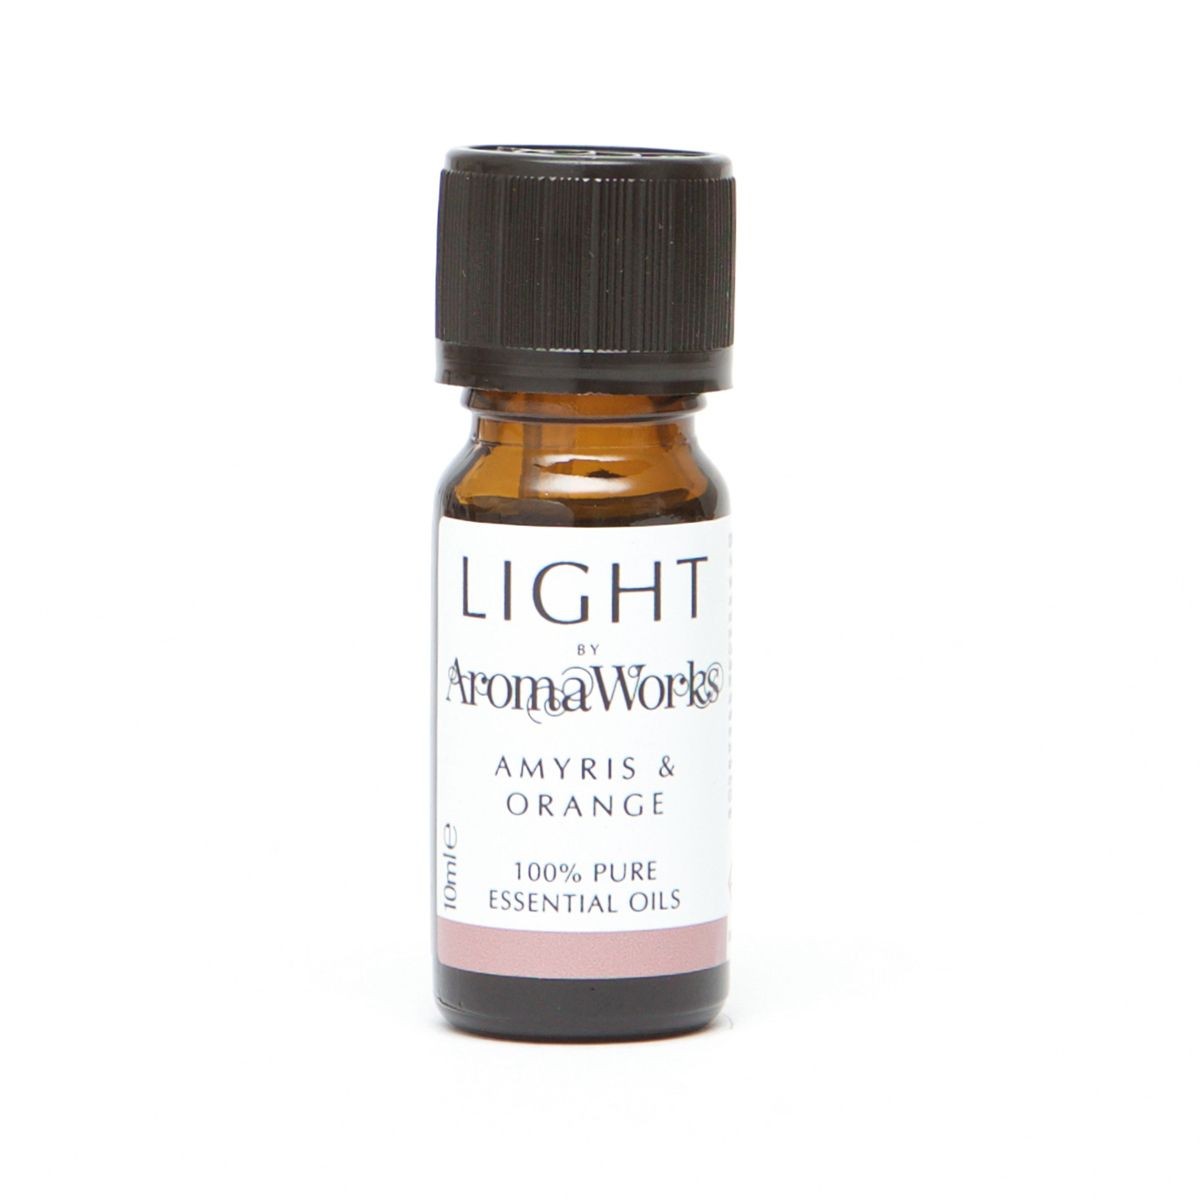 Aromaworks Light Range Amyris & Orange Essential Oil 10ml